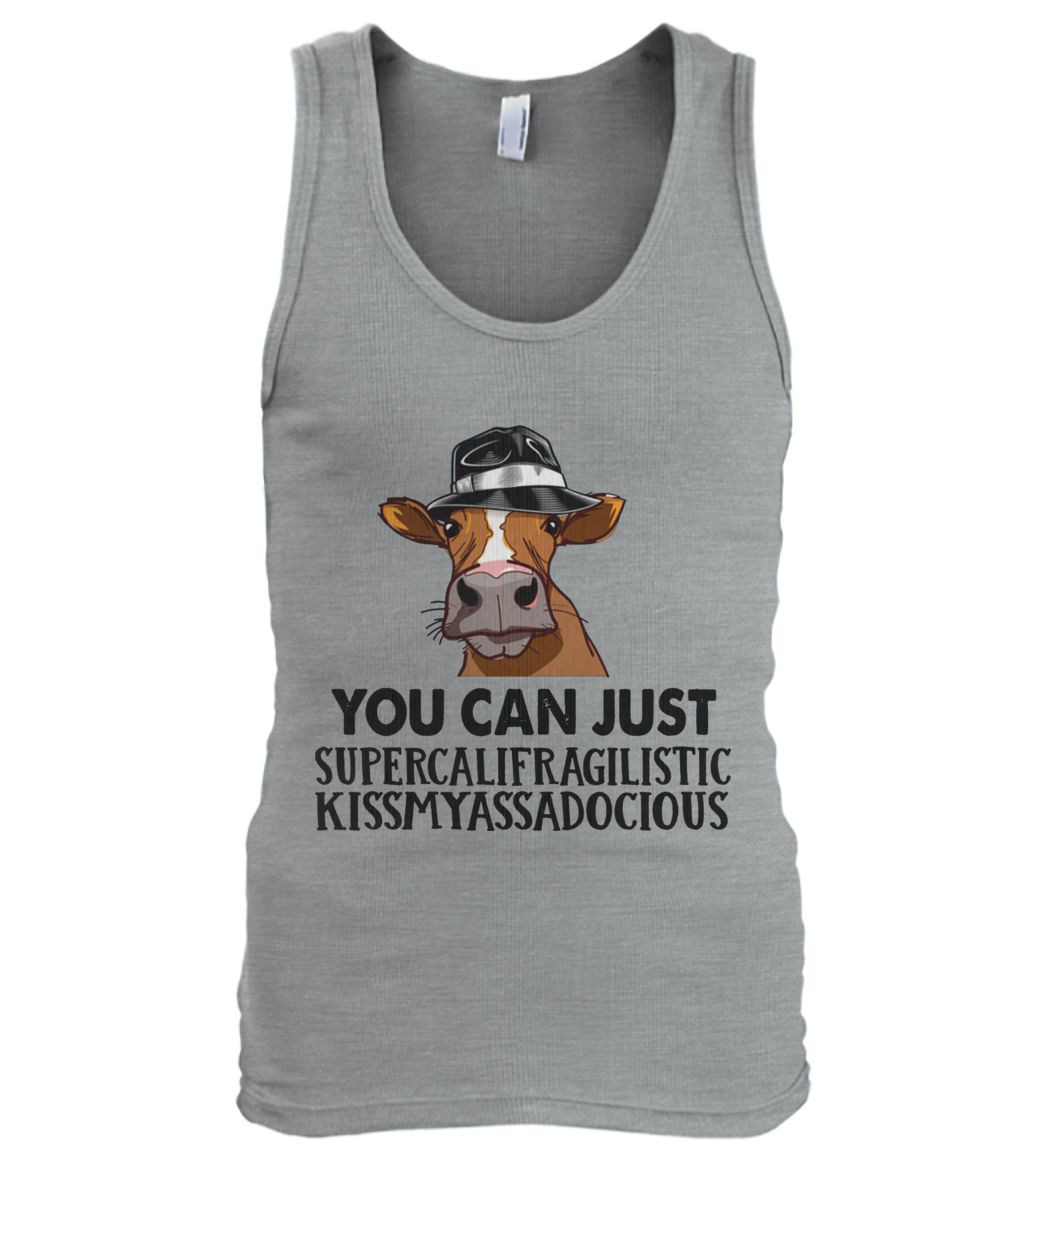 You can just supercalifuckilistic kissmyassadocious heifer men's tank top